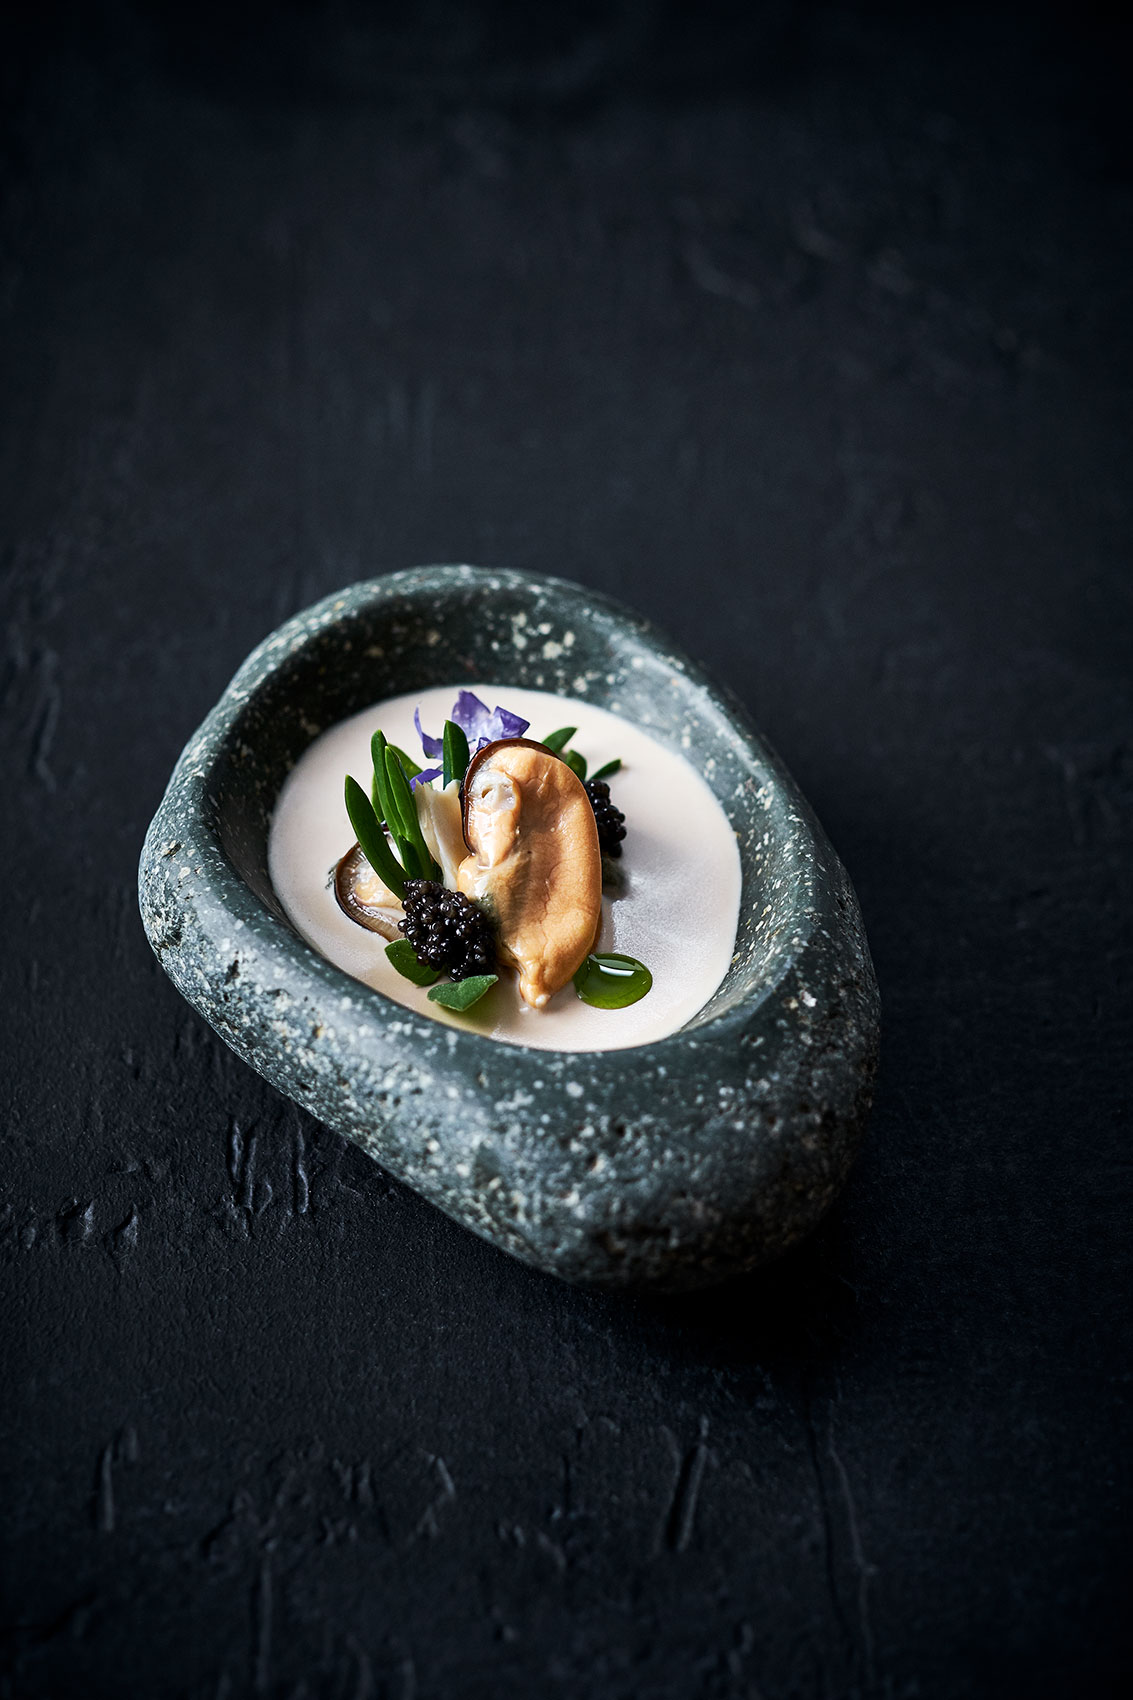 Hiakai • Savoury Kina Custard with Mussels & Caviar in Rock Bowl • Lifestyle & Hospitality Food Photography